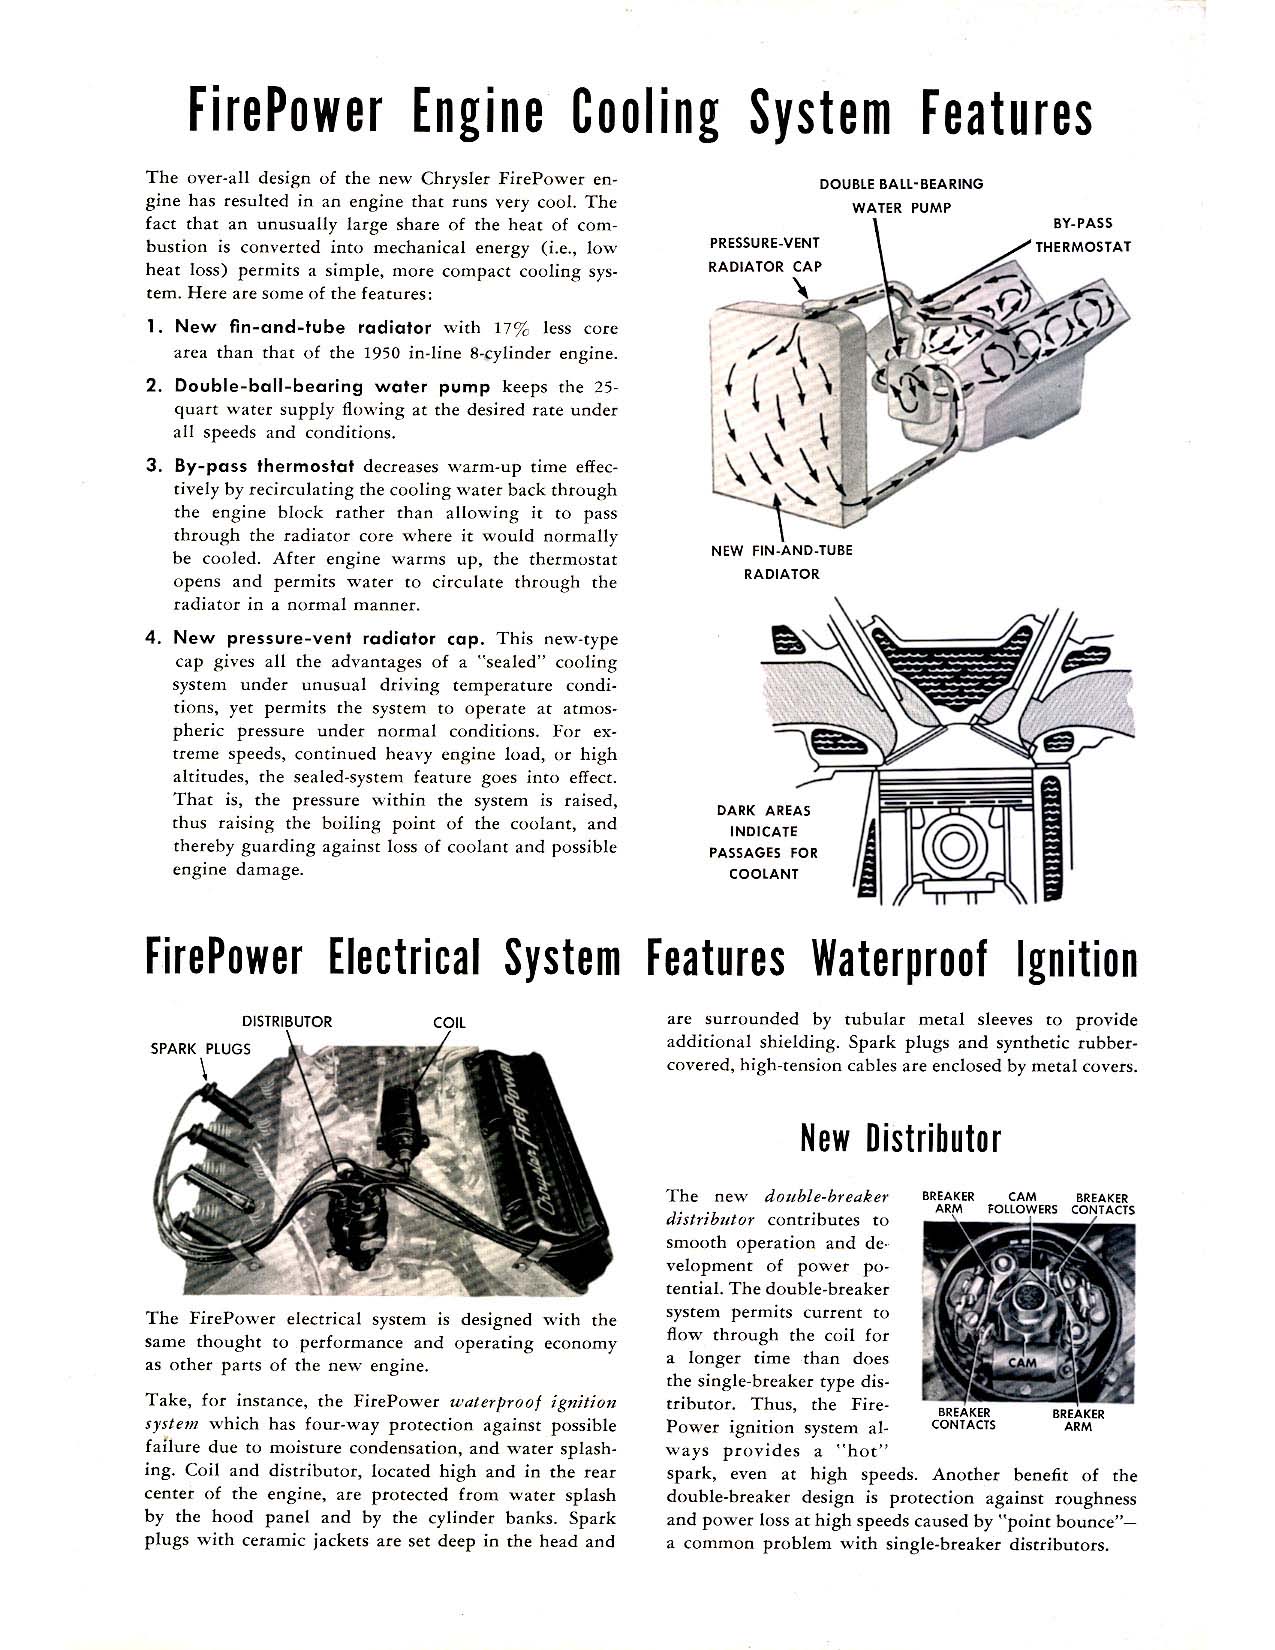 1951 Chrysler Firepower Advantages Brochure Page 2